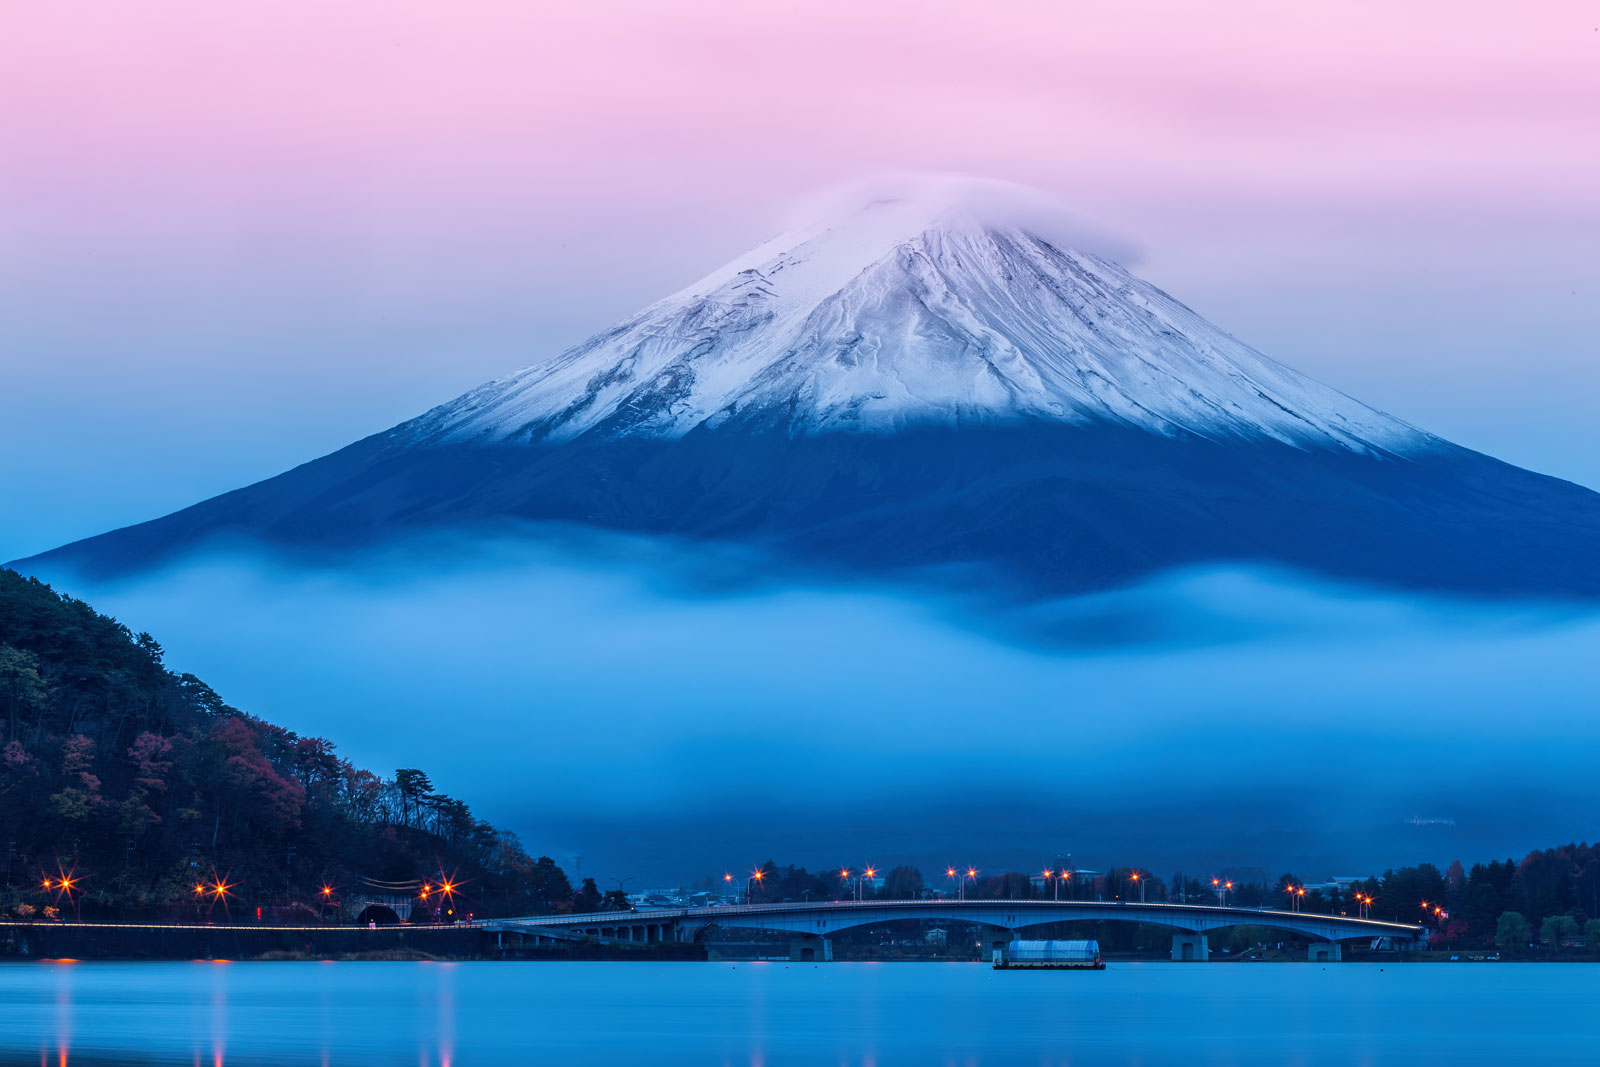 Mount Fuji | Facts, Height, Location, & Eruptions | Britannica